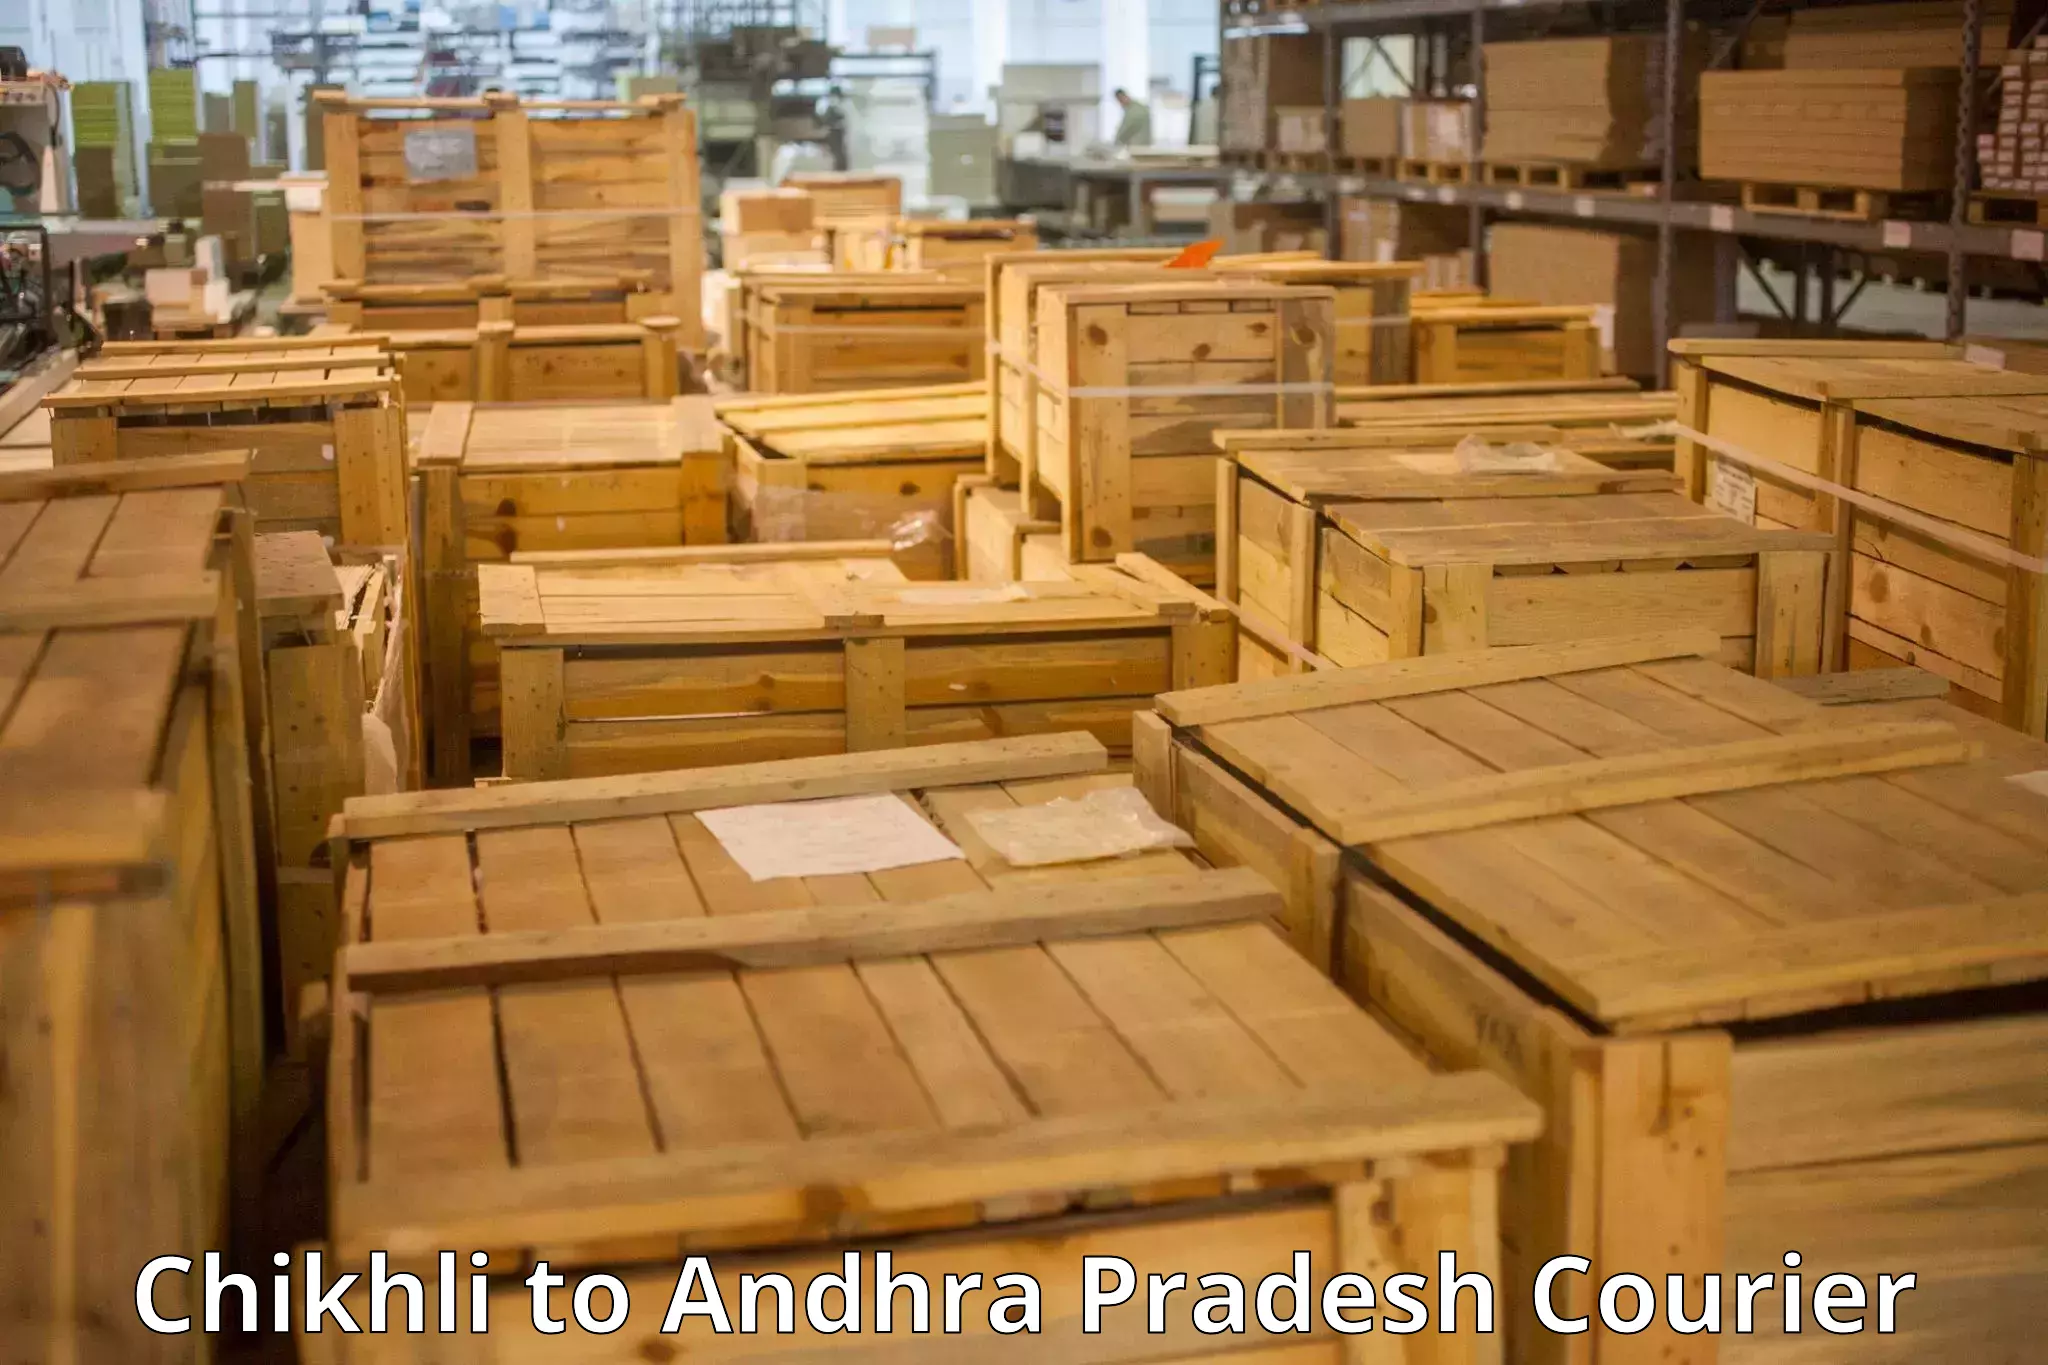 Luggage shipment specialists Chikhli to Andhra Pradesh